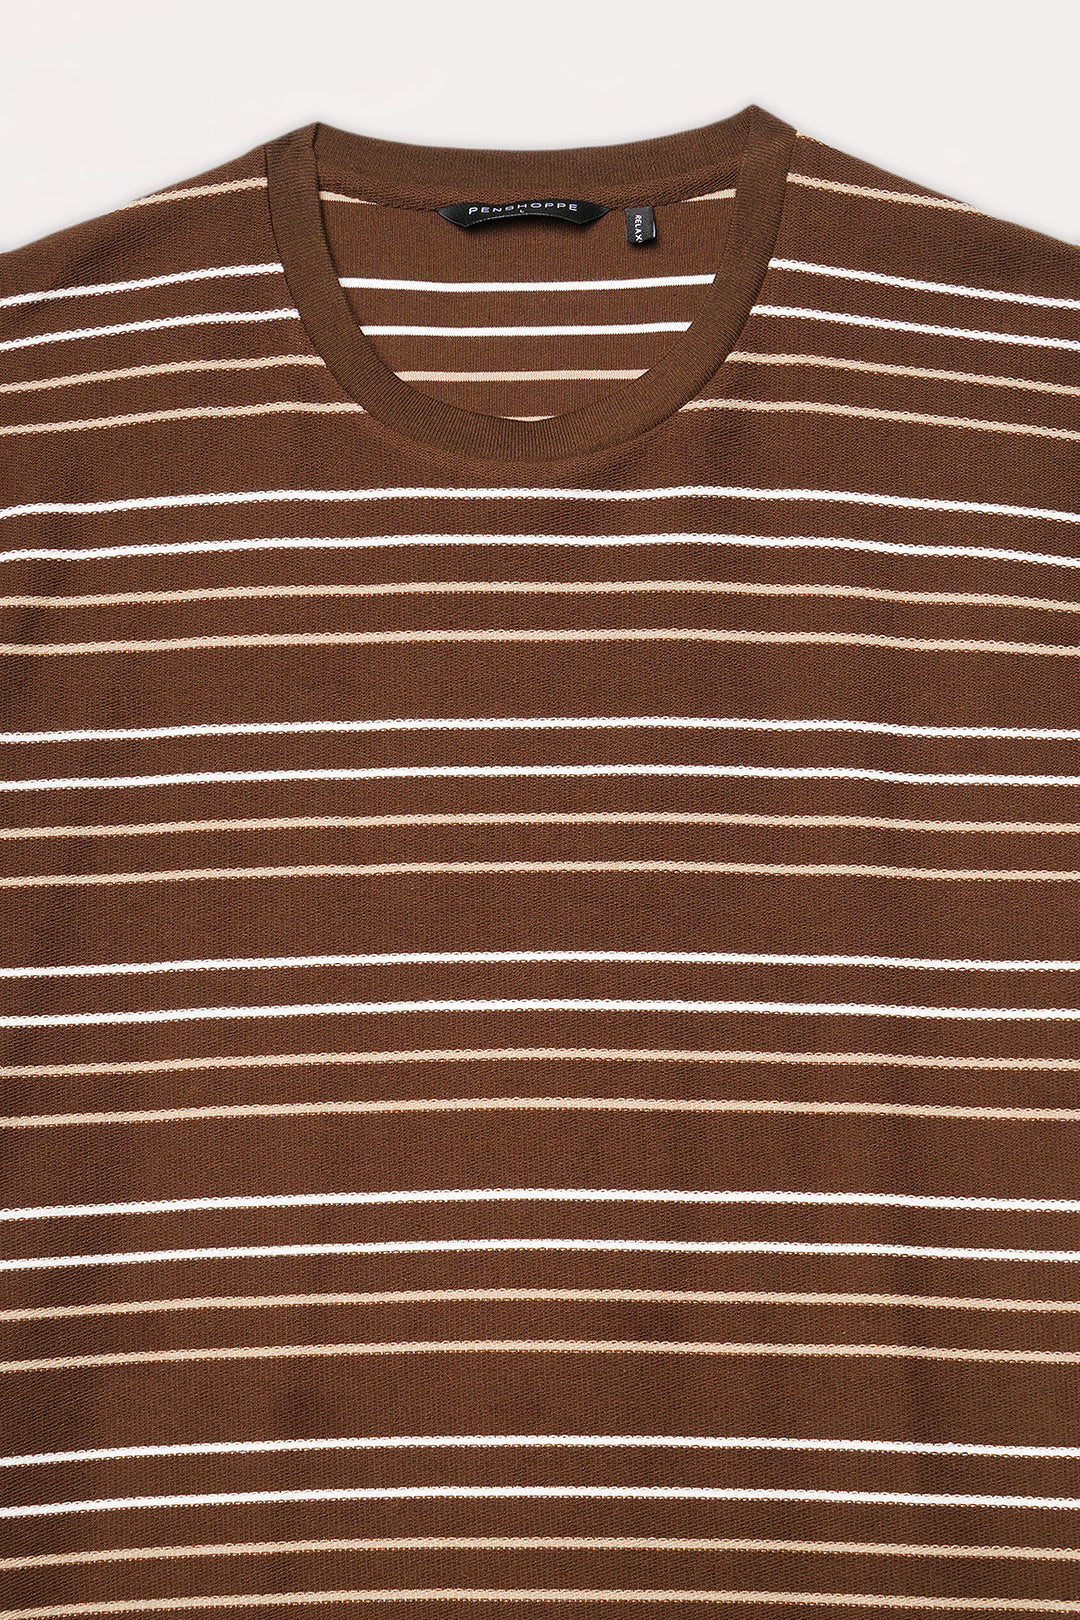 970950-Chocolate Brown (3).jpg